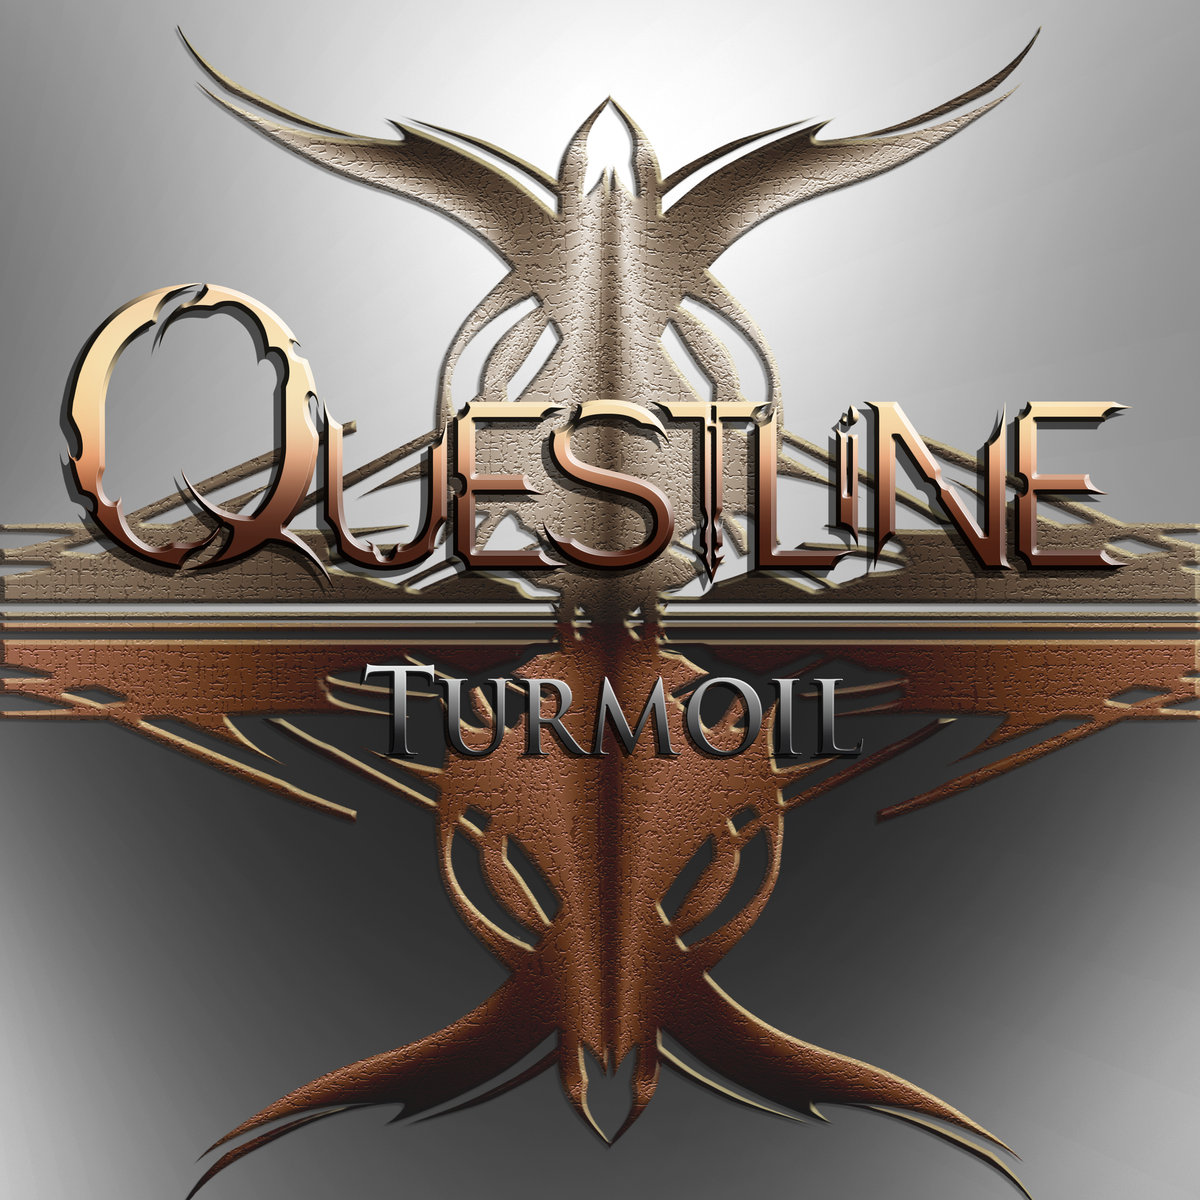 Questline - Turmoil (2015) Album Info